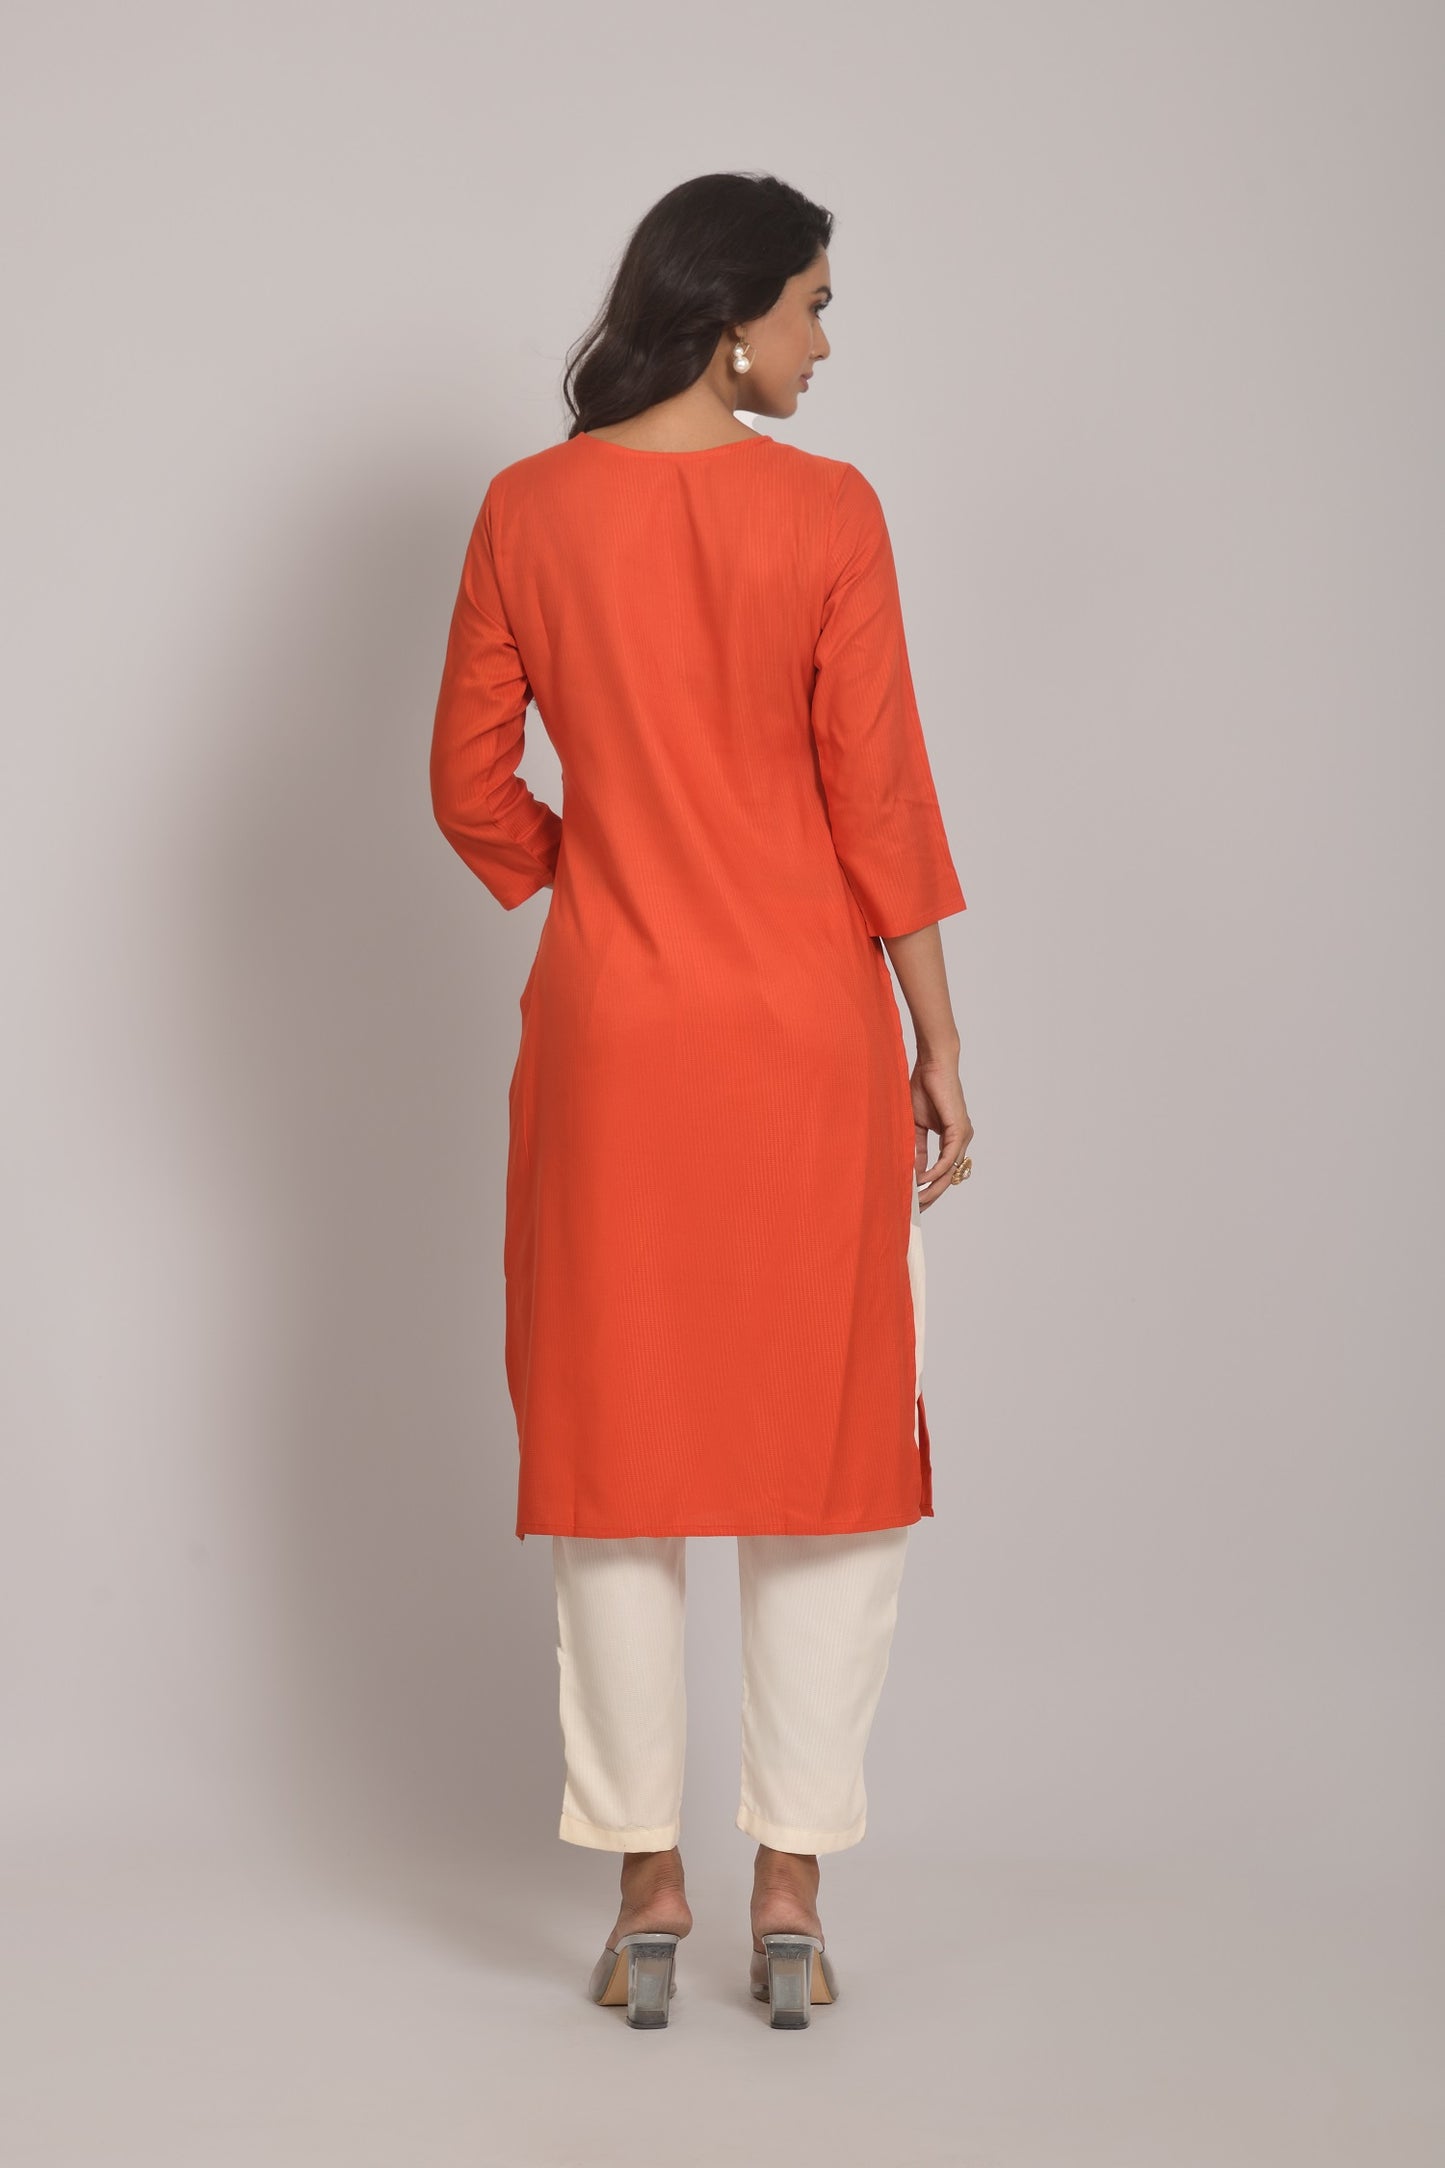 Buy Orange Kurtis for Women Online in India